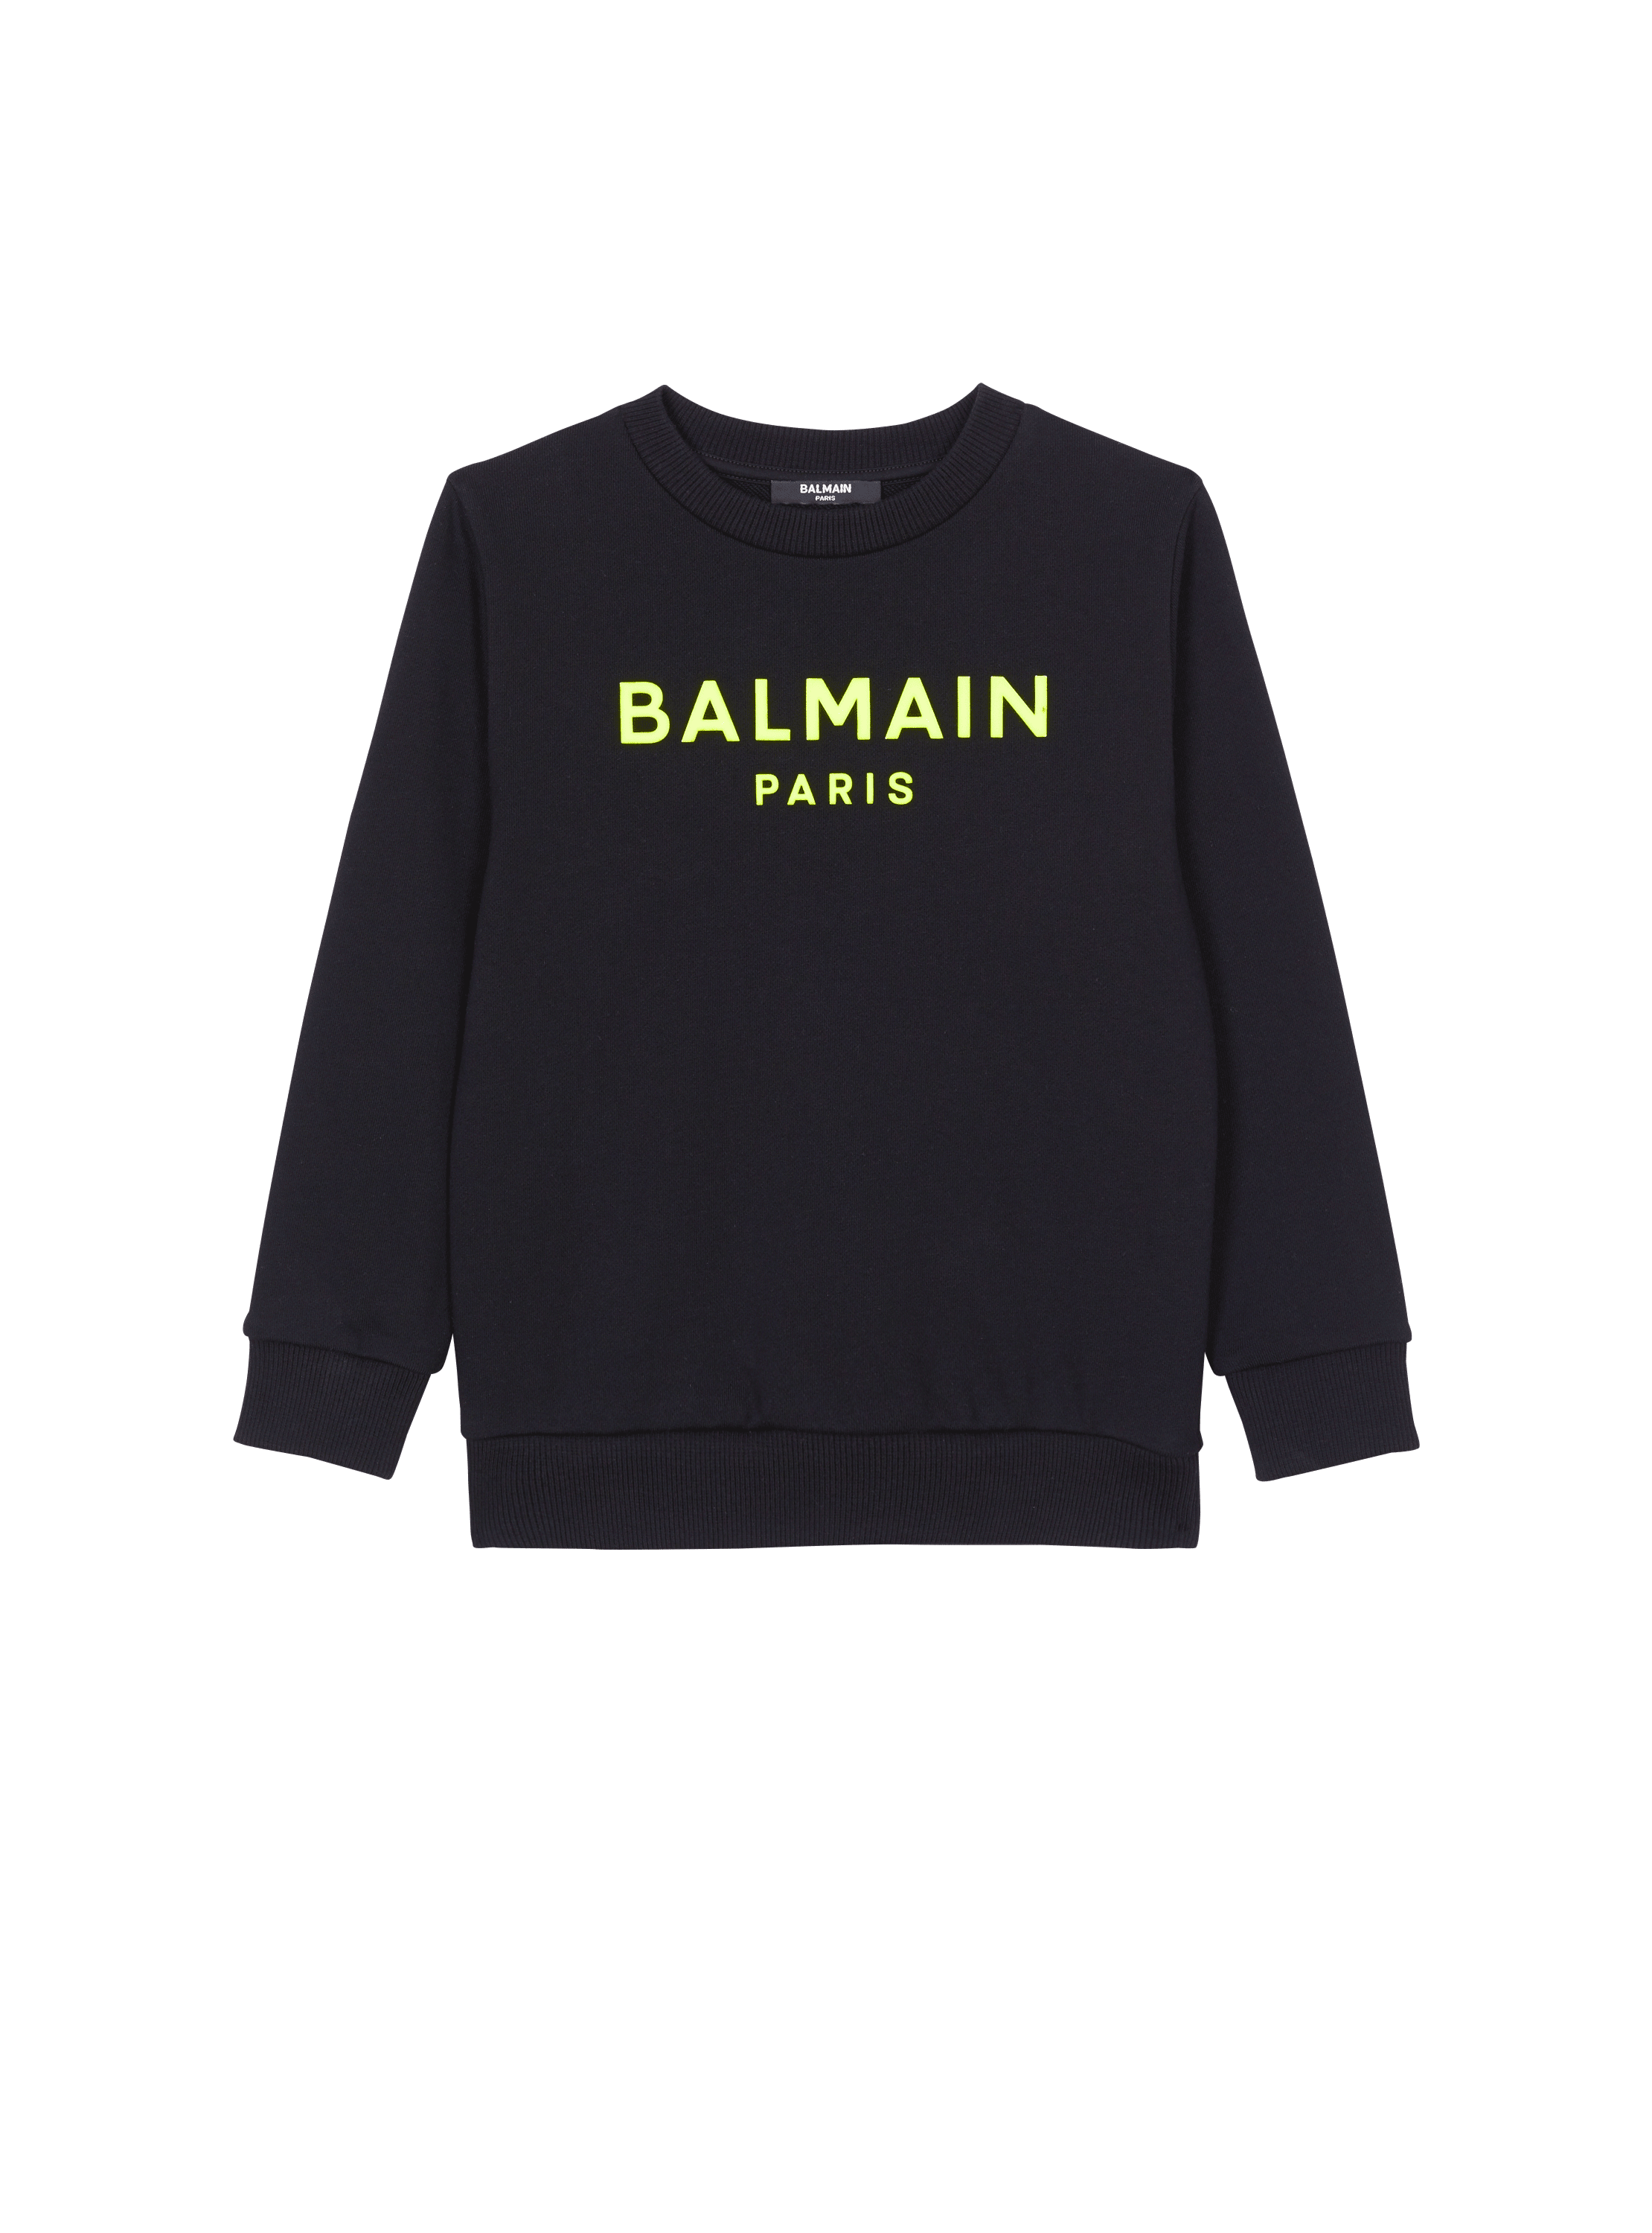 Balmain Paris sweatshirt - Child | BALMAIN